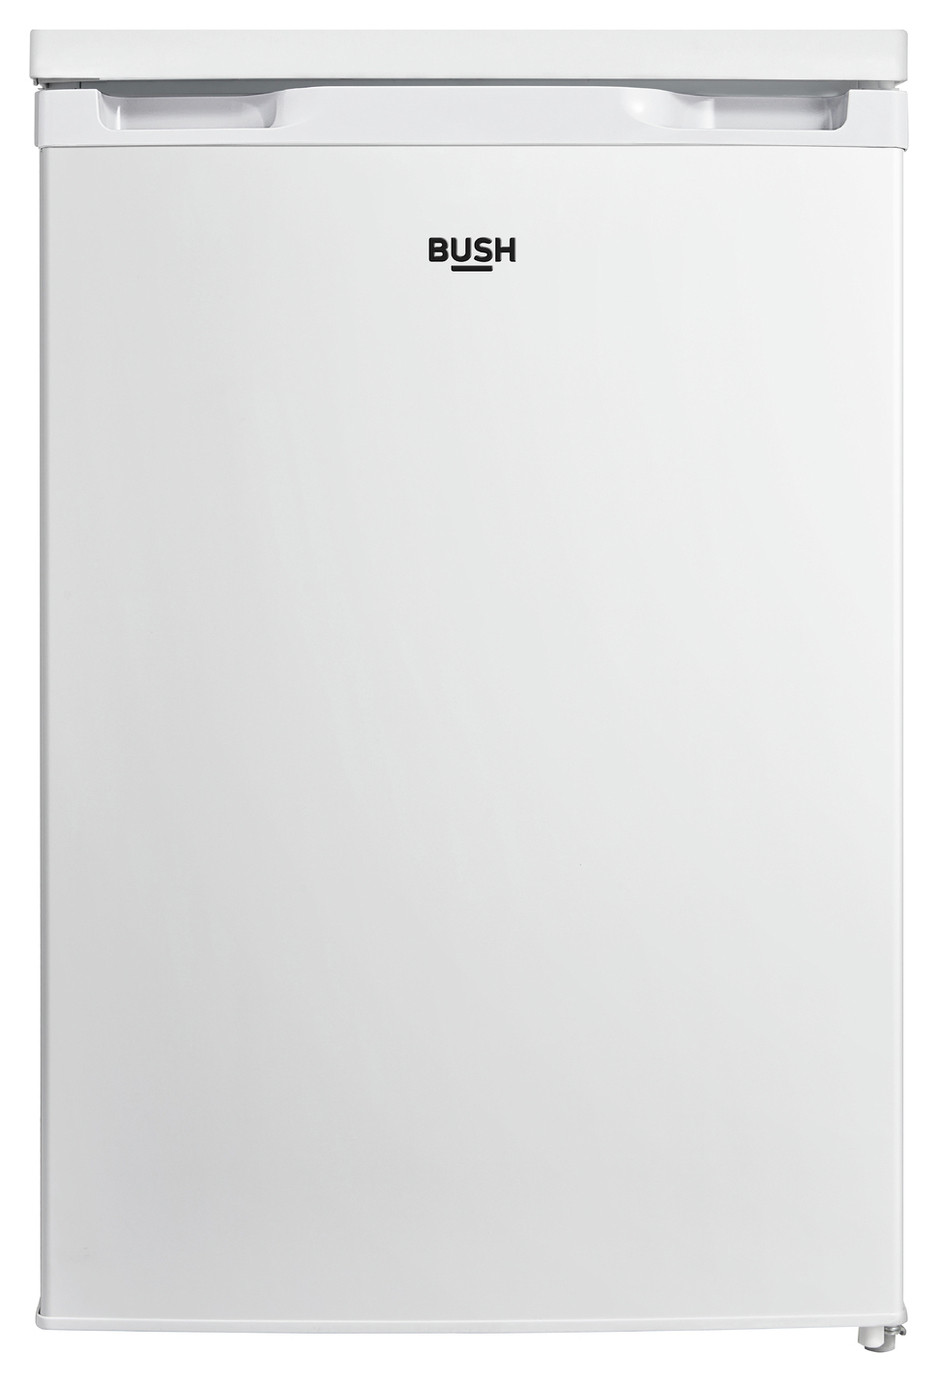 Bush NE5585UCFR White Under Counter Freezer featured image